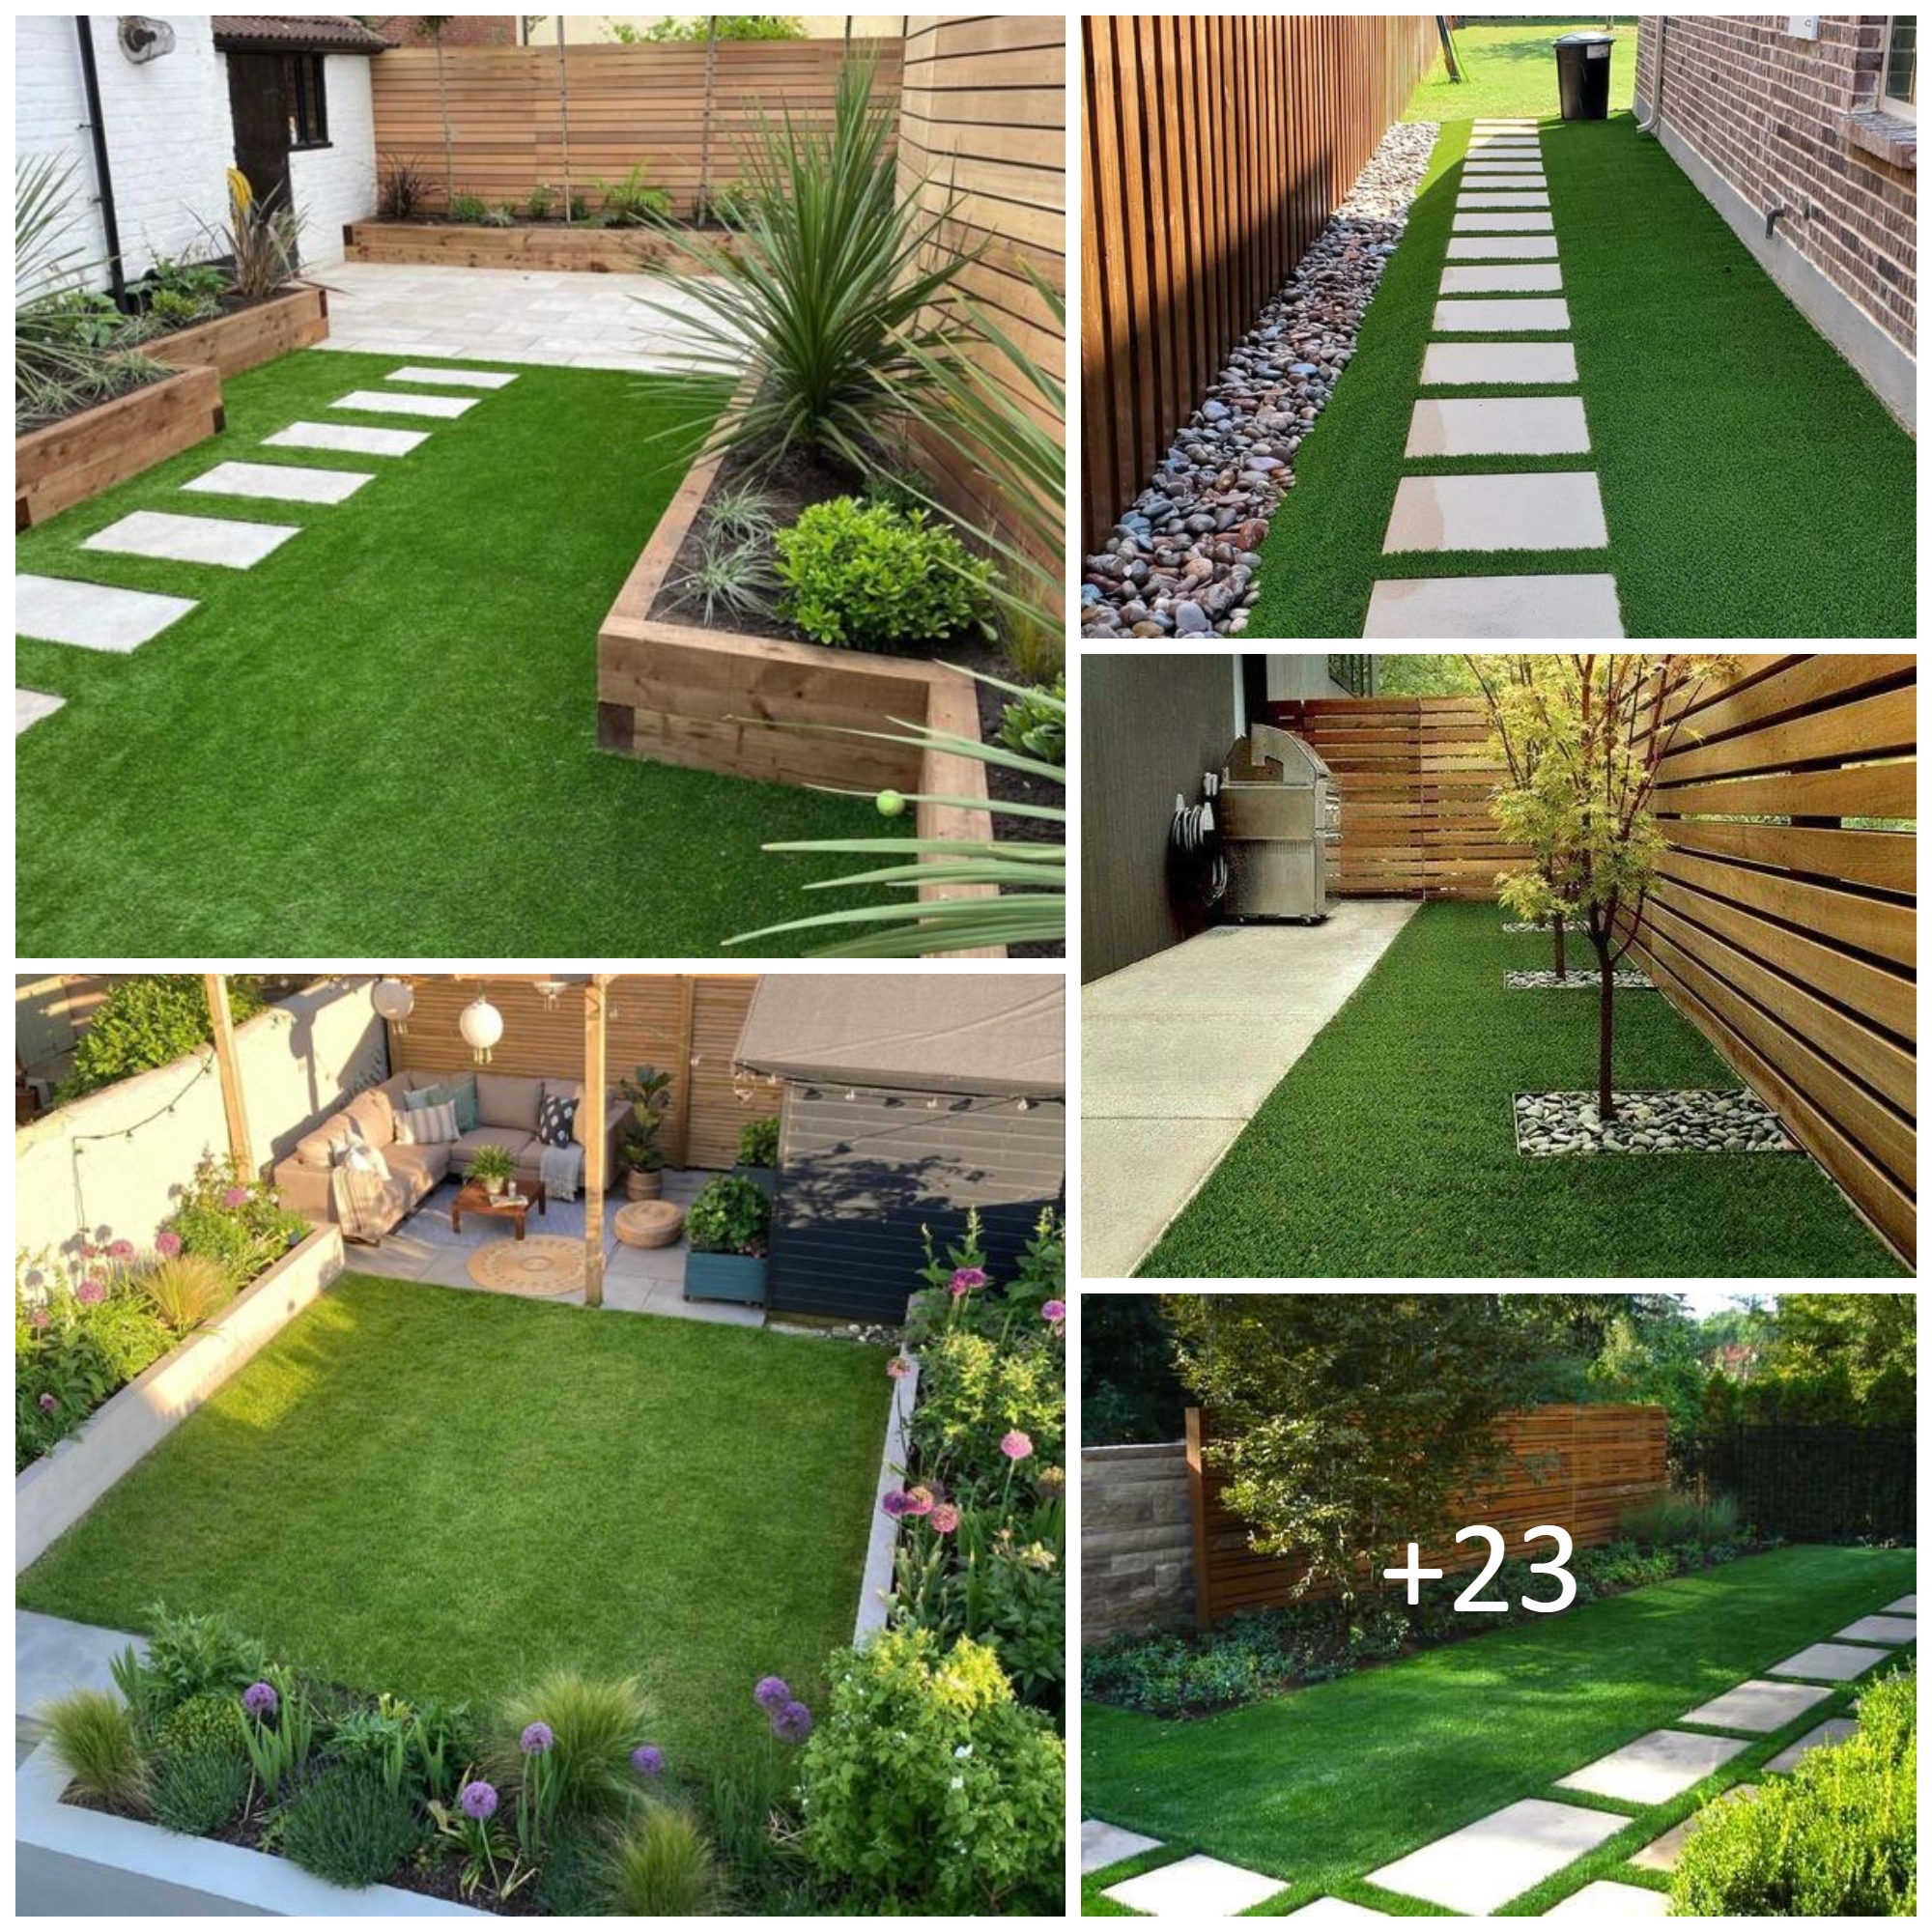 Backyard landscape design & renovation with artificial grass